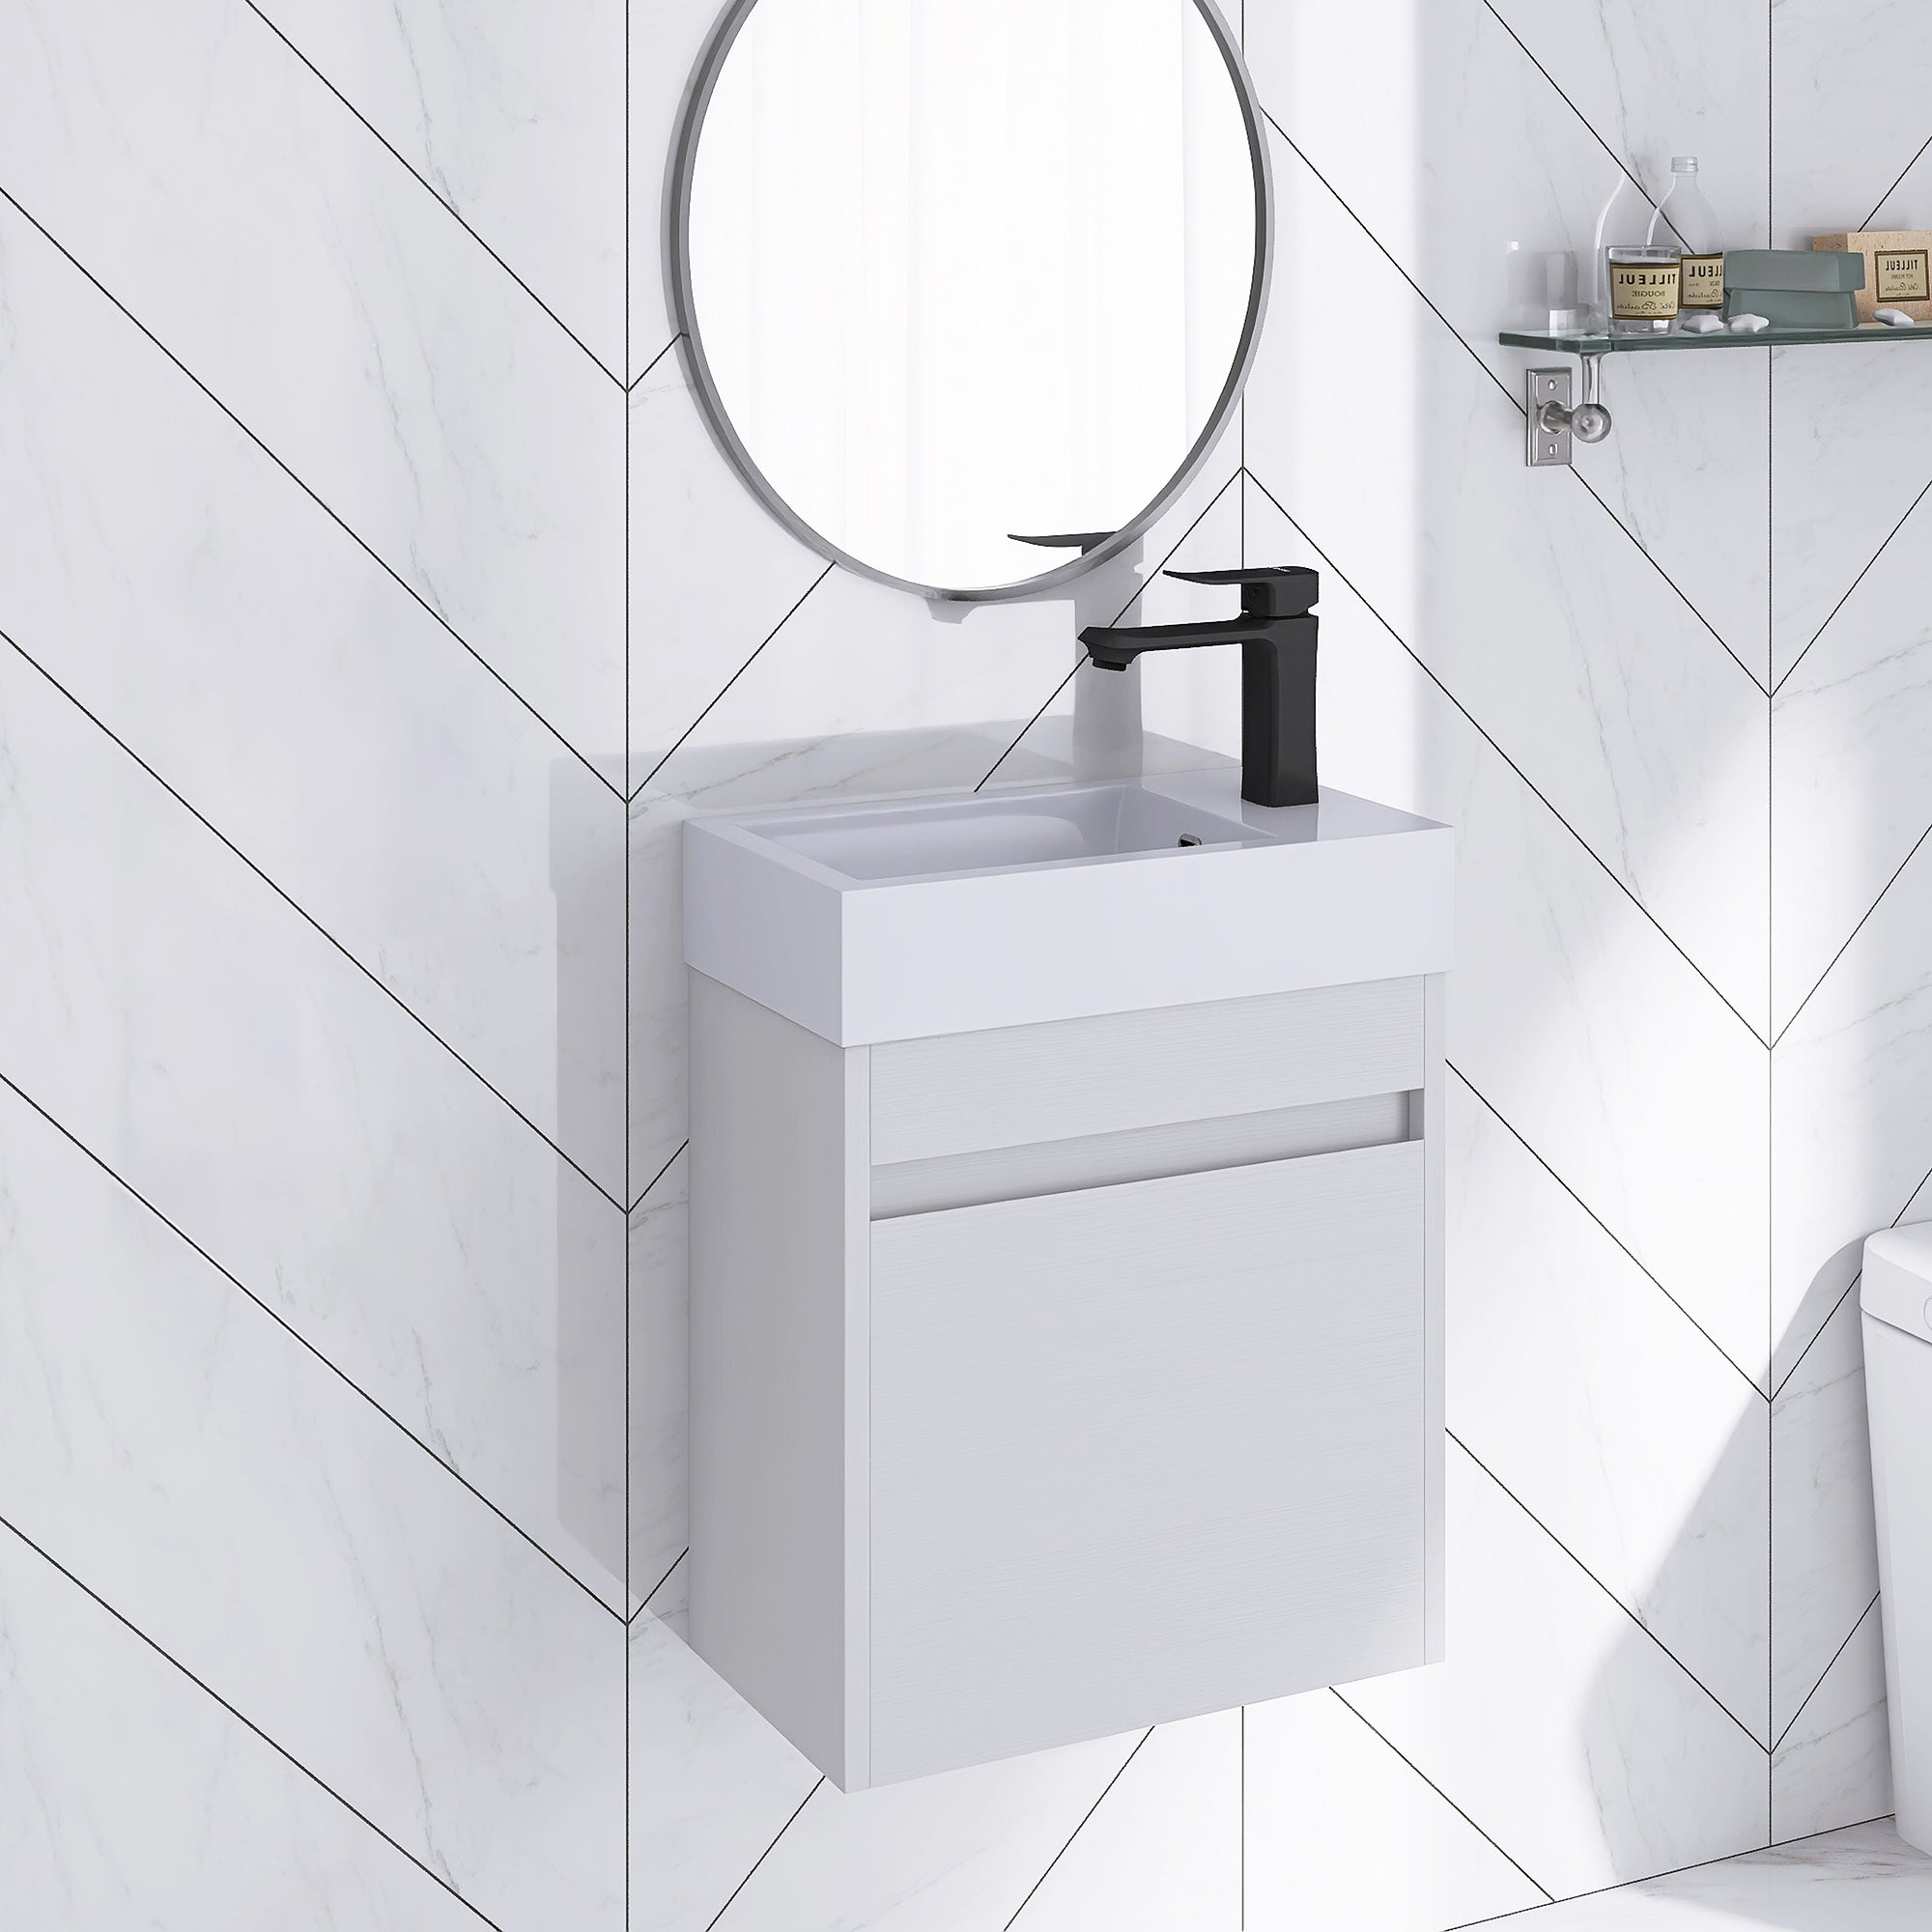 18" Bathroom Vanity with Sink, Floating Bathroom Vanity Sink Set, Wall Mount Bathroom Cabinet Vanity with Single Sink Combo for Small Space (18 x 10, Imitative Oak)